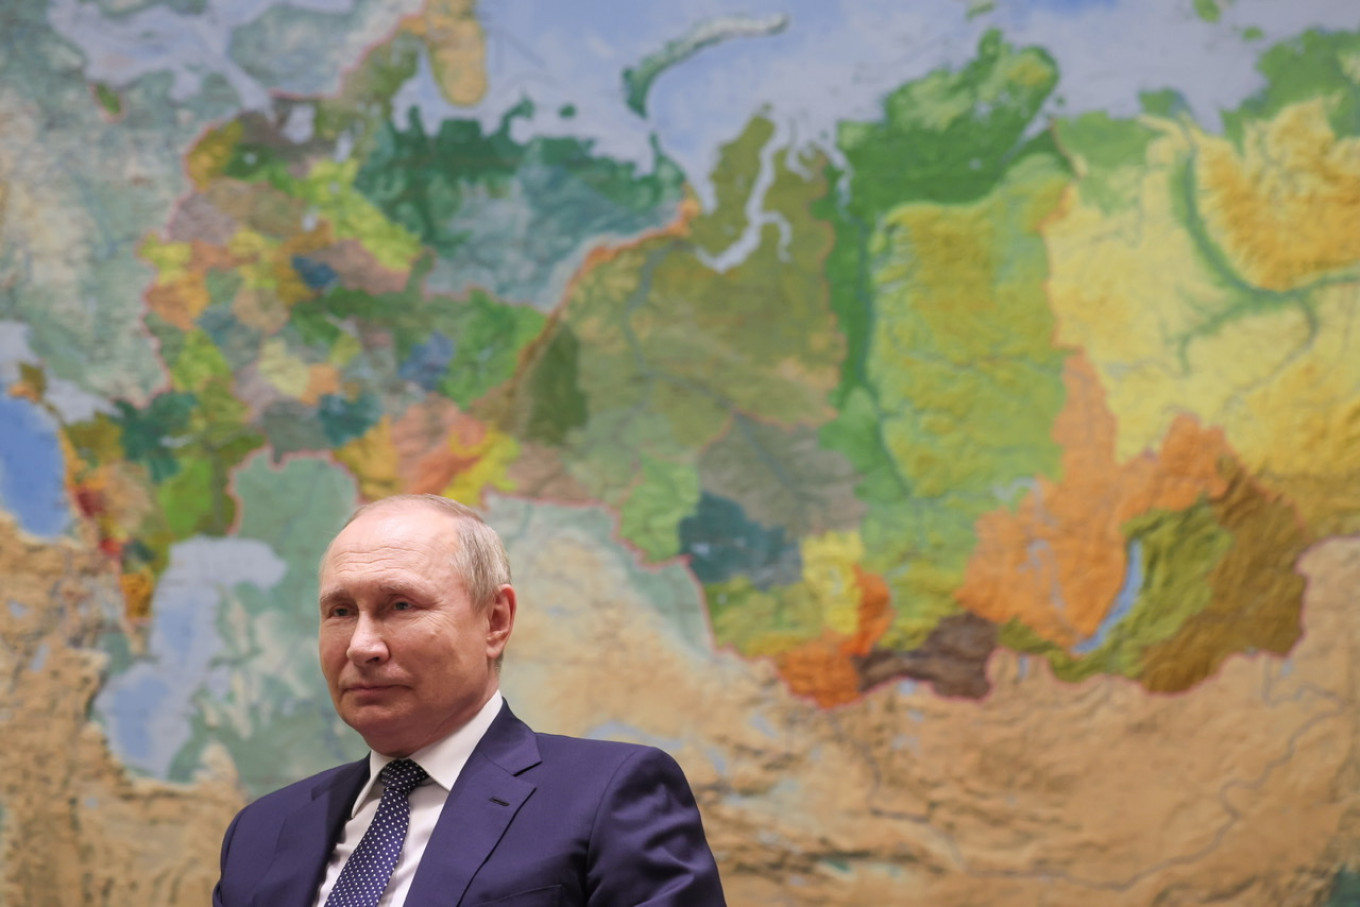 Putin Warns of Strikes Over Missile Supplies as Blasts Rock Kyiv